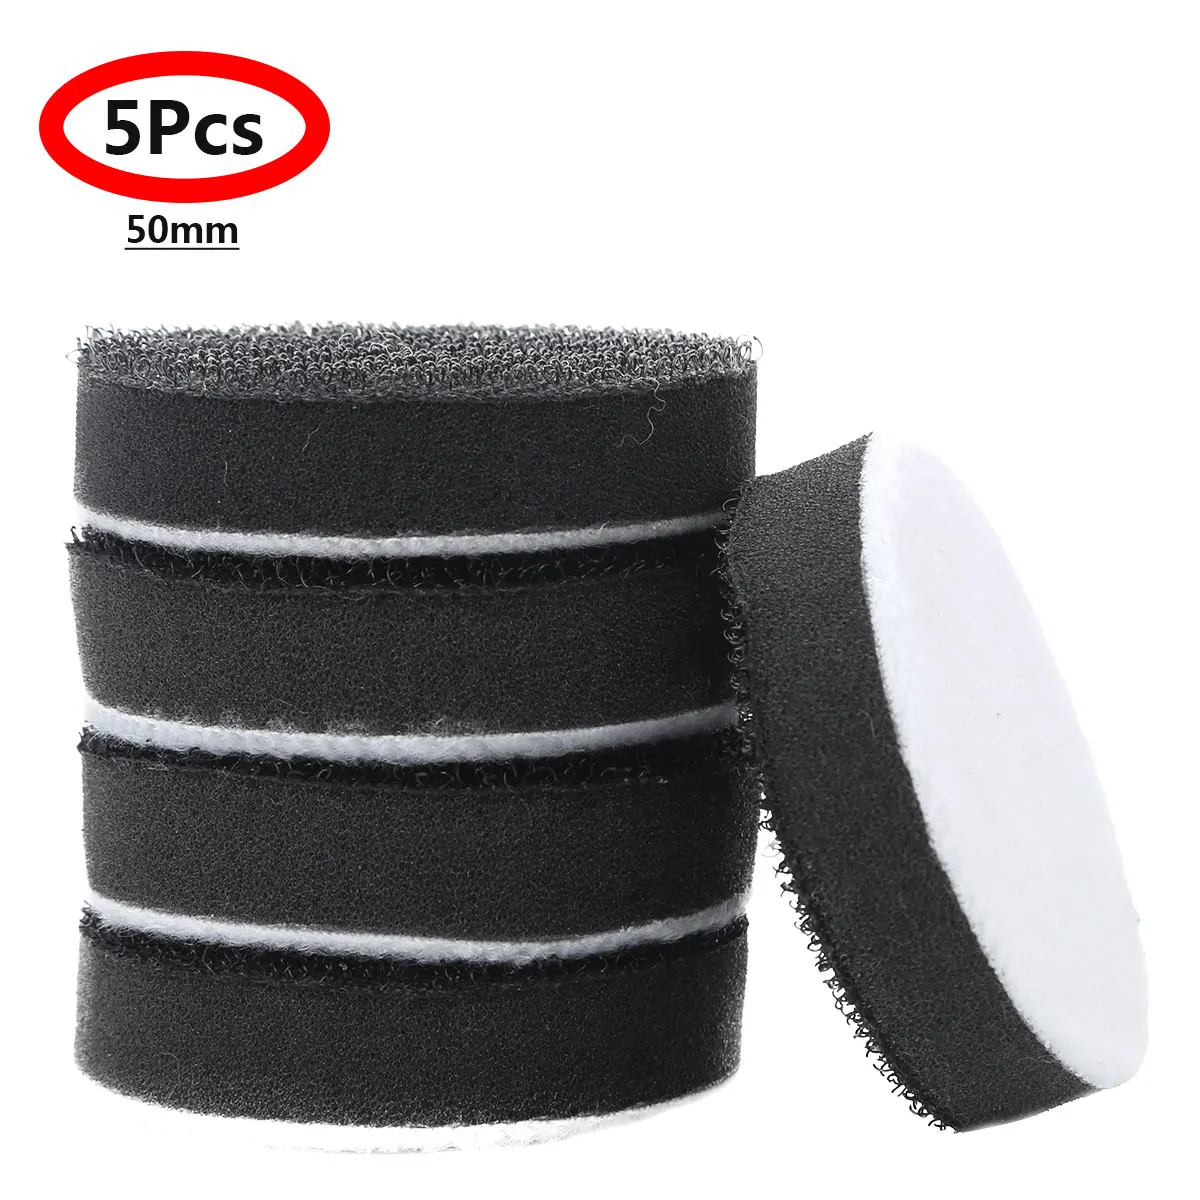 

5pcs 50/75mm Soft Density Interface Pad Sponge Cushion Buffer Backing Pads Dremel Accessories Festool Chainsaw Sharpener Dspiae